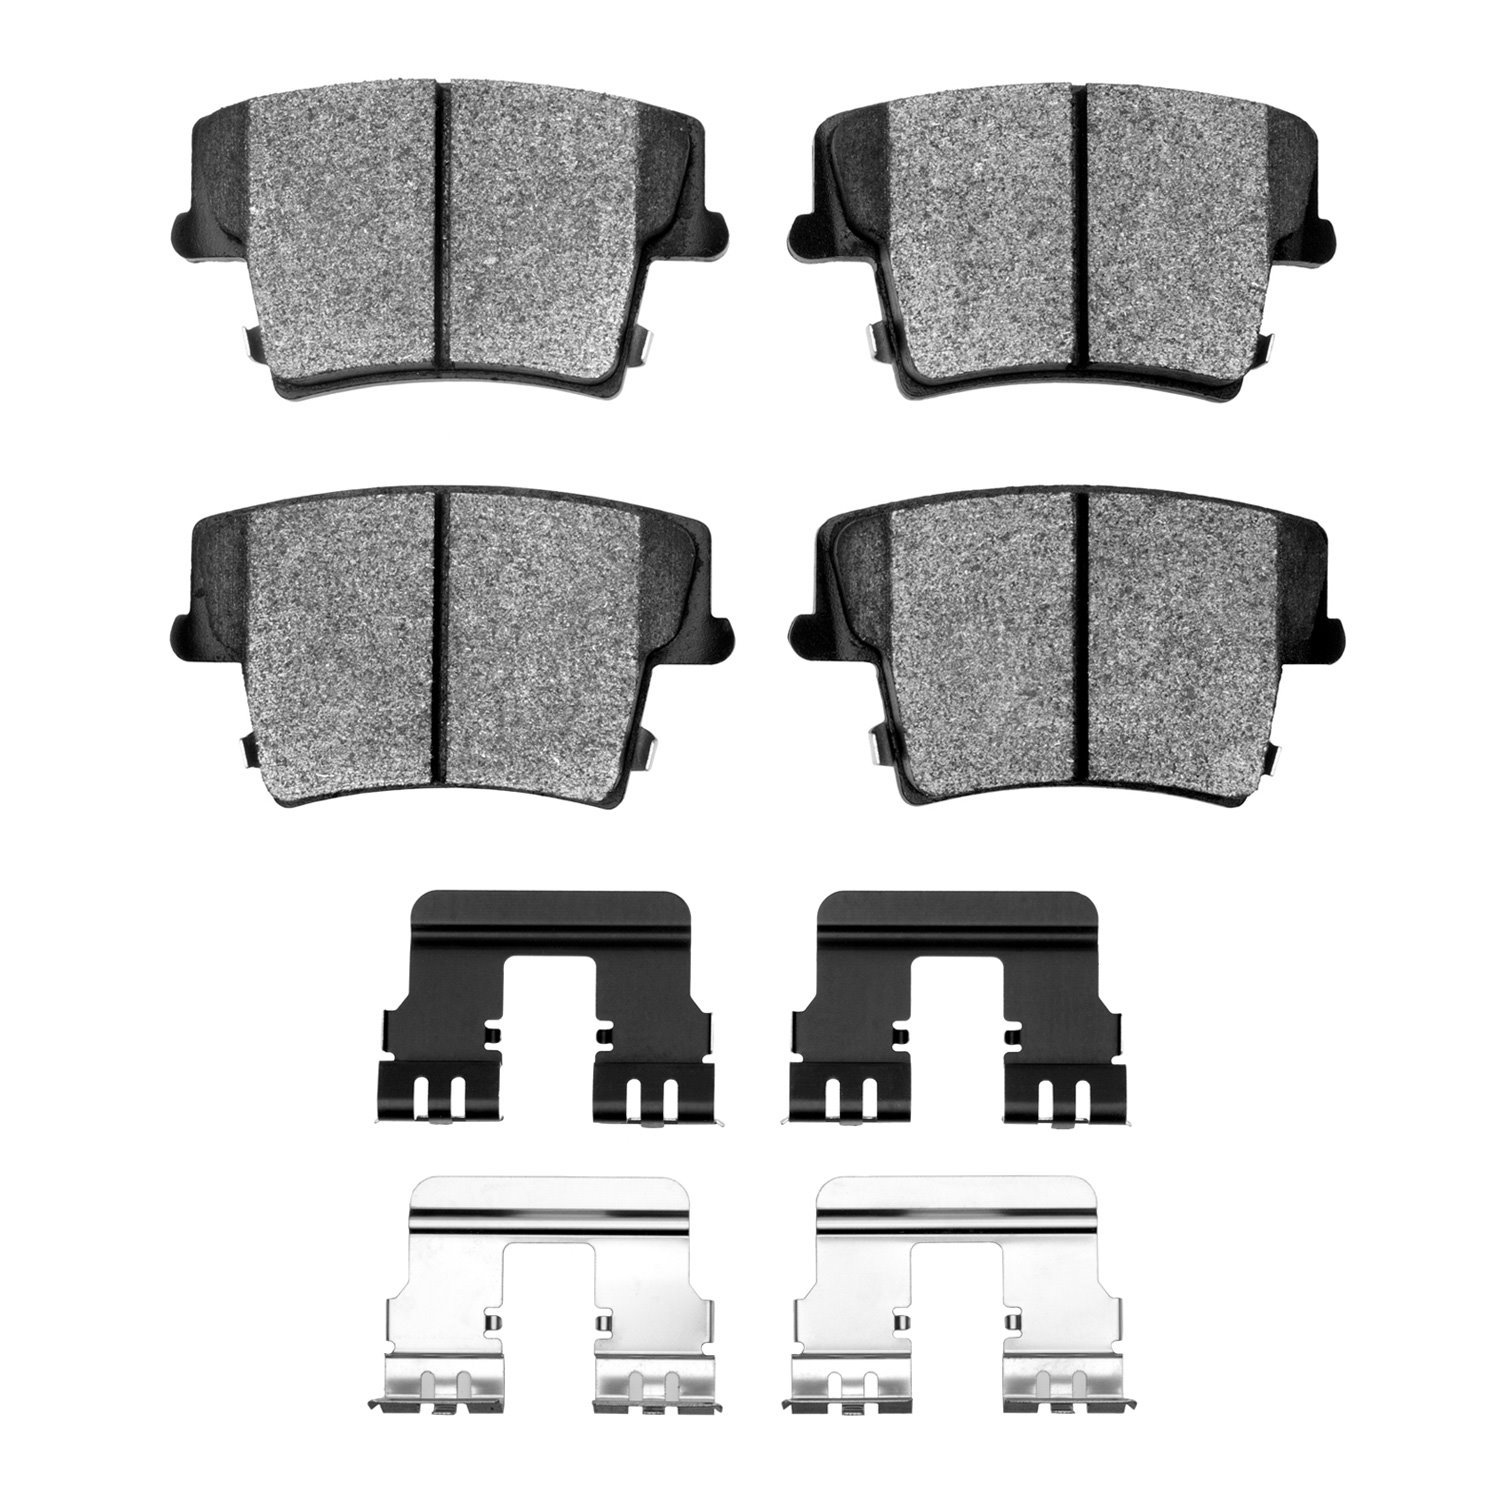 Super-Duty Brake Pads & Hardware Kit, Fits Select Mopar, Position: Rear